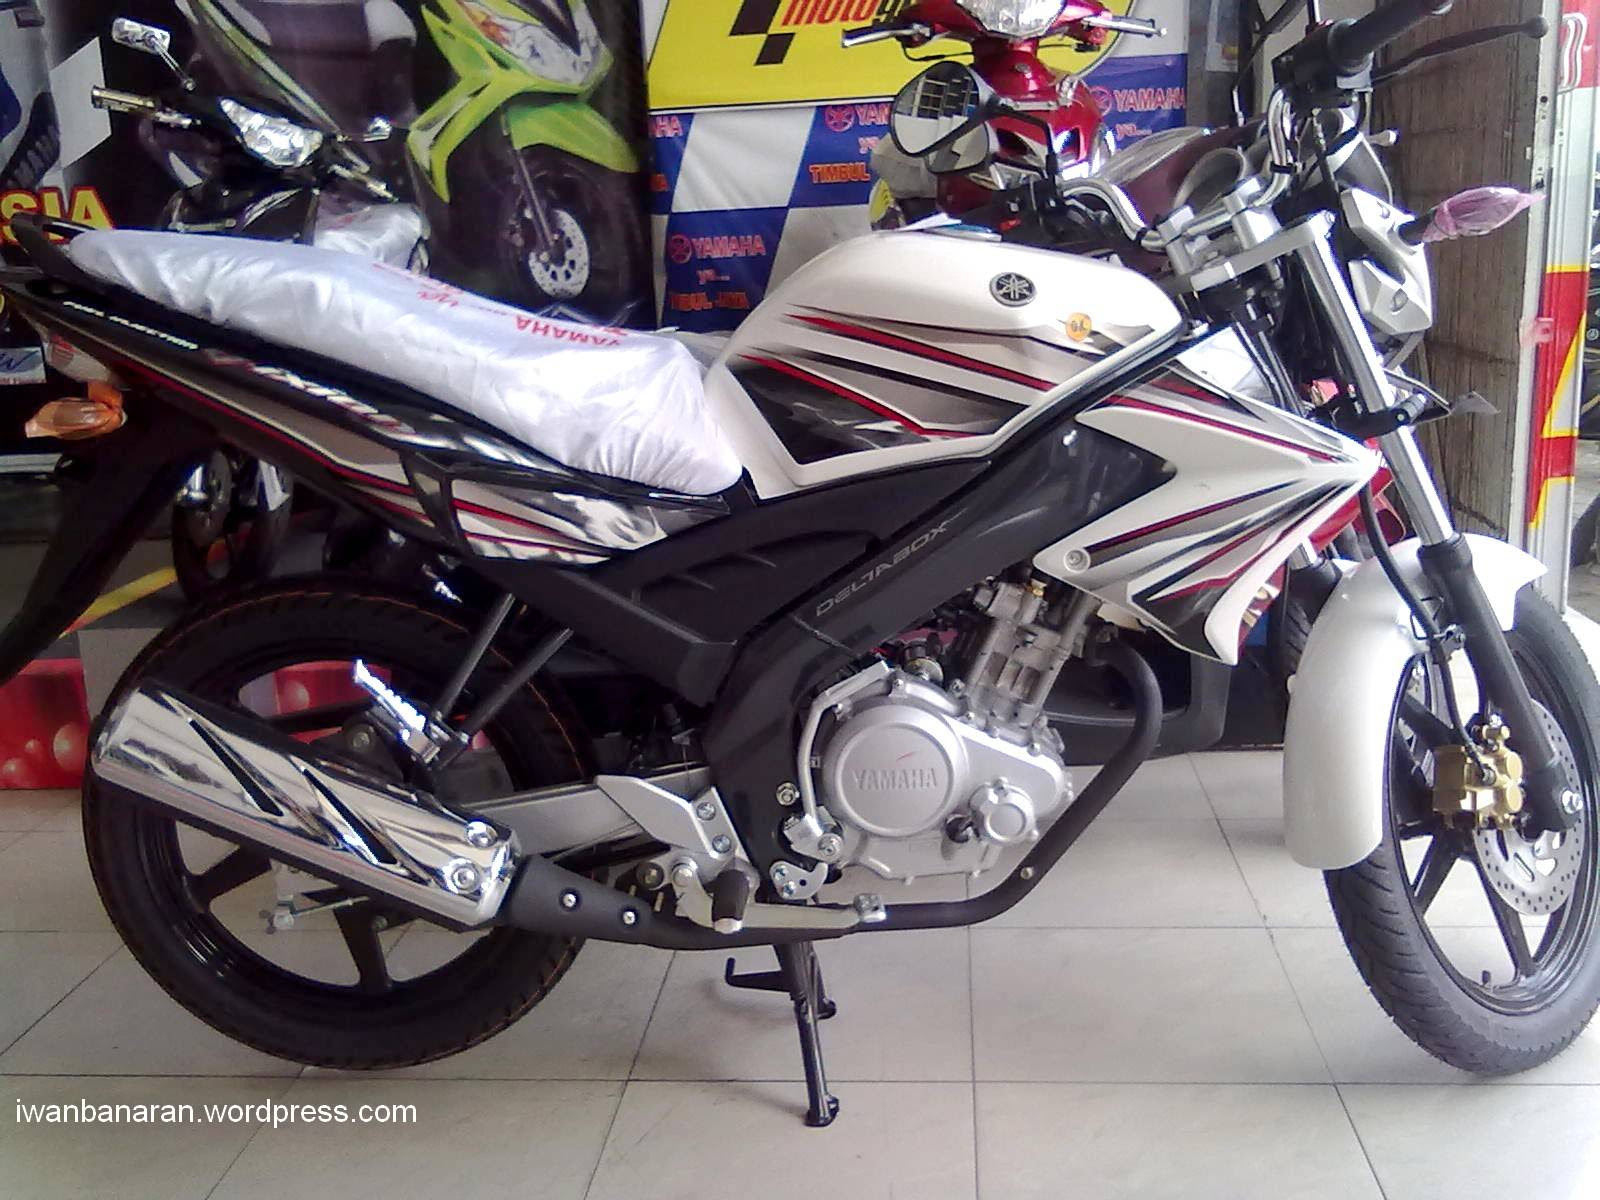 Download 54 Modifikasi Motor Yamaha Vixion 2012 Terkeren Sumped Motor